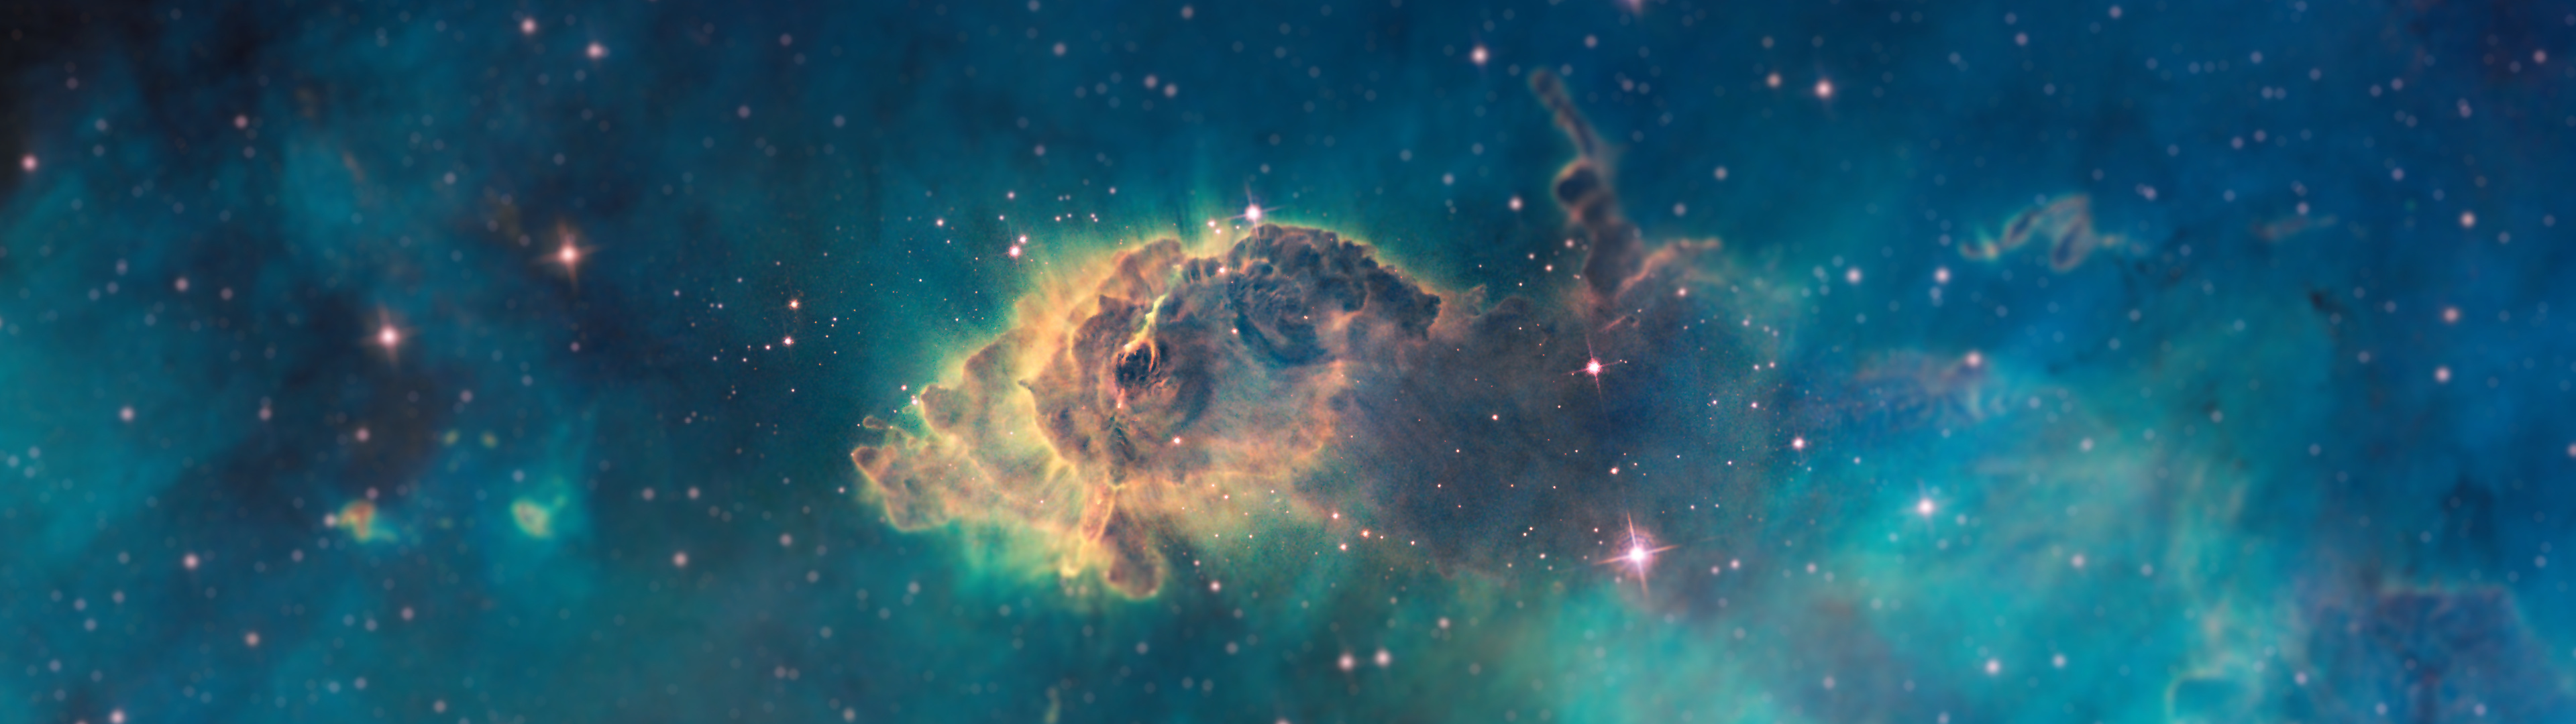 Hubble exploration, Celestial beauty, Extraterrestrial wonders, Fascinating universe, 3840x1080 Dual Screen Desktop